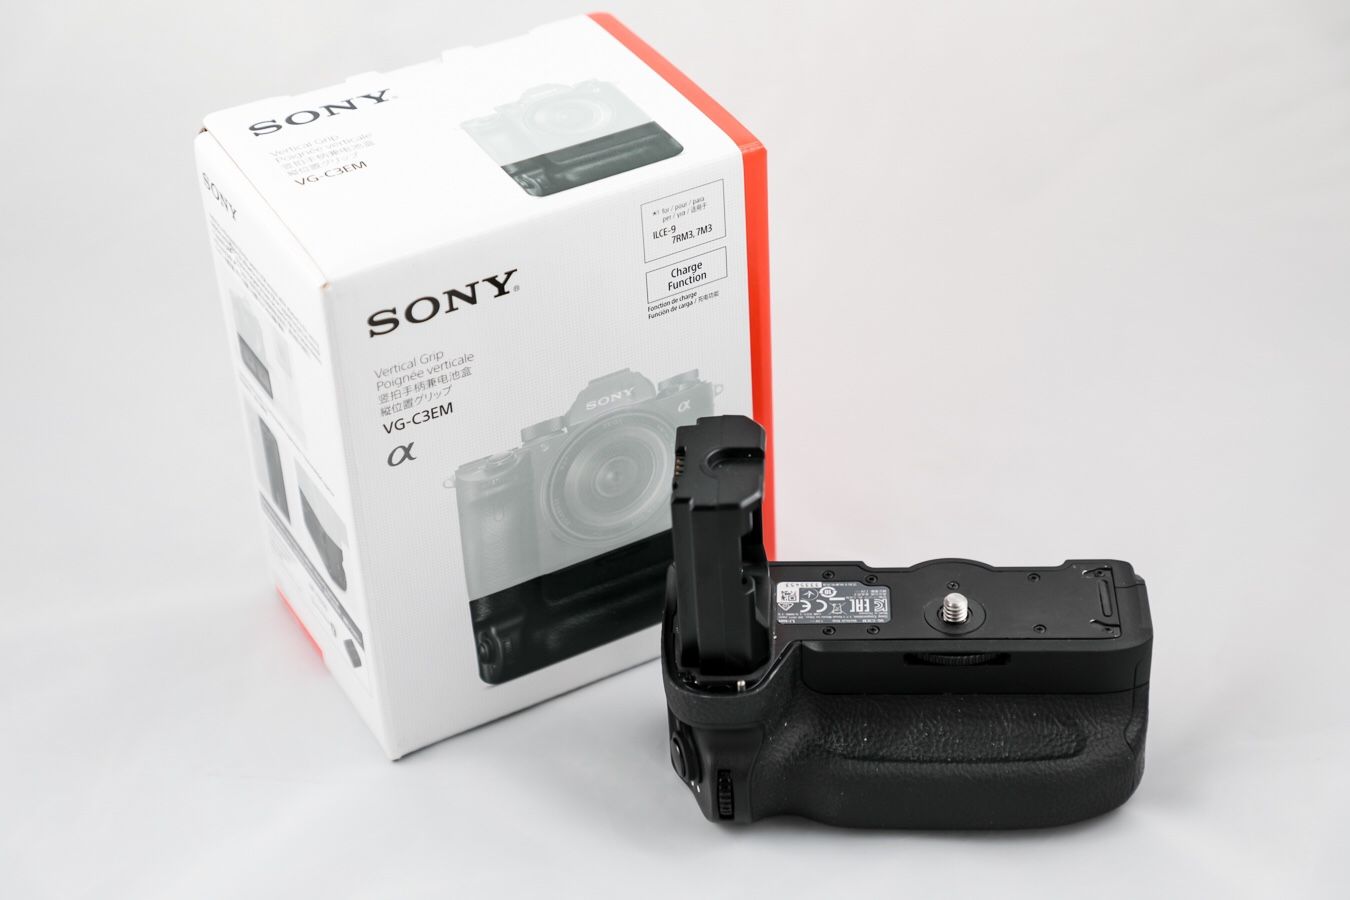 Sony Camera battery grip VG-C3EM